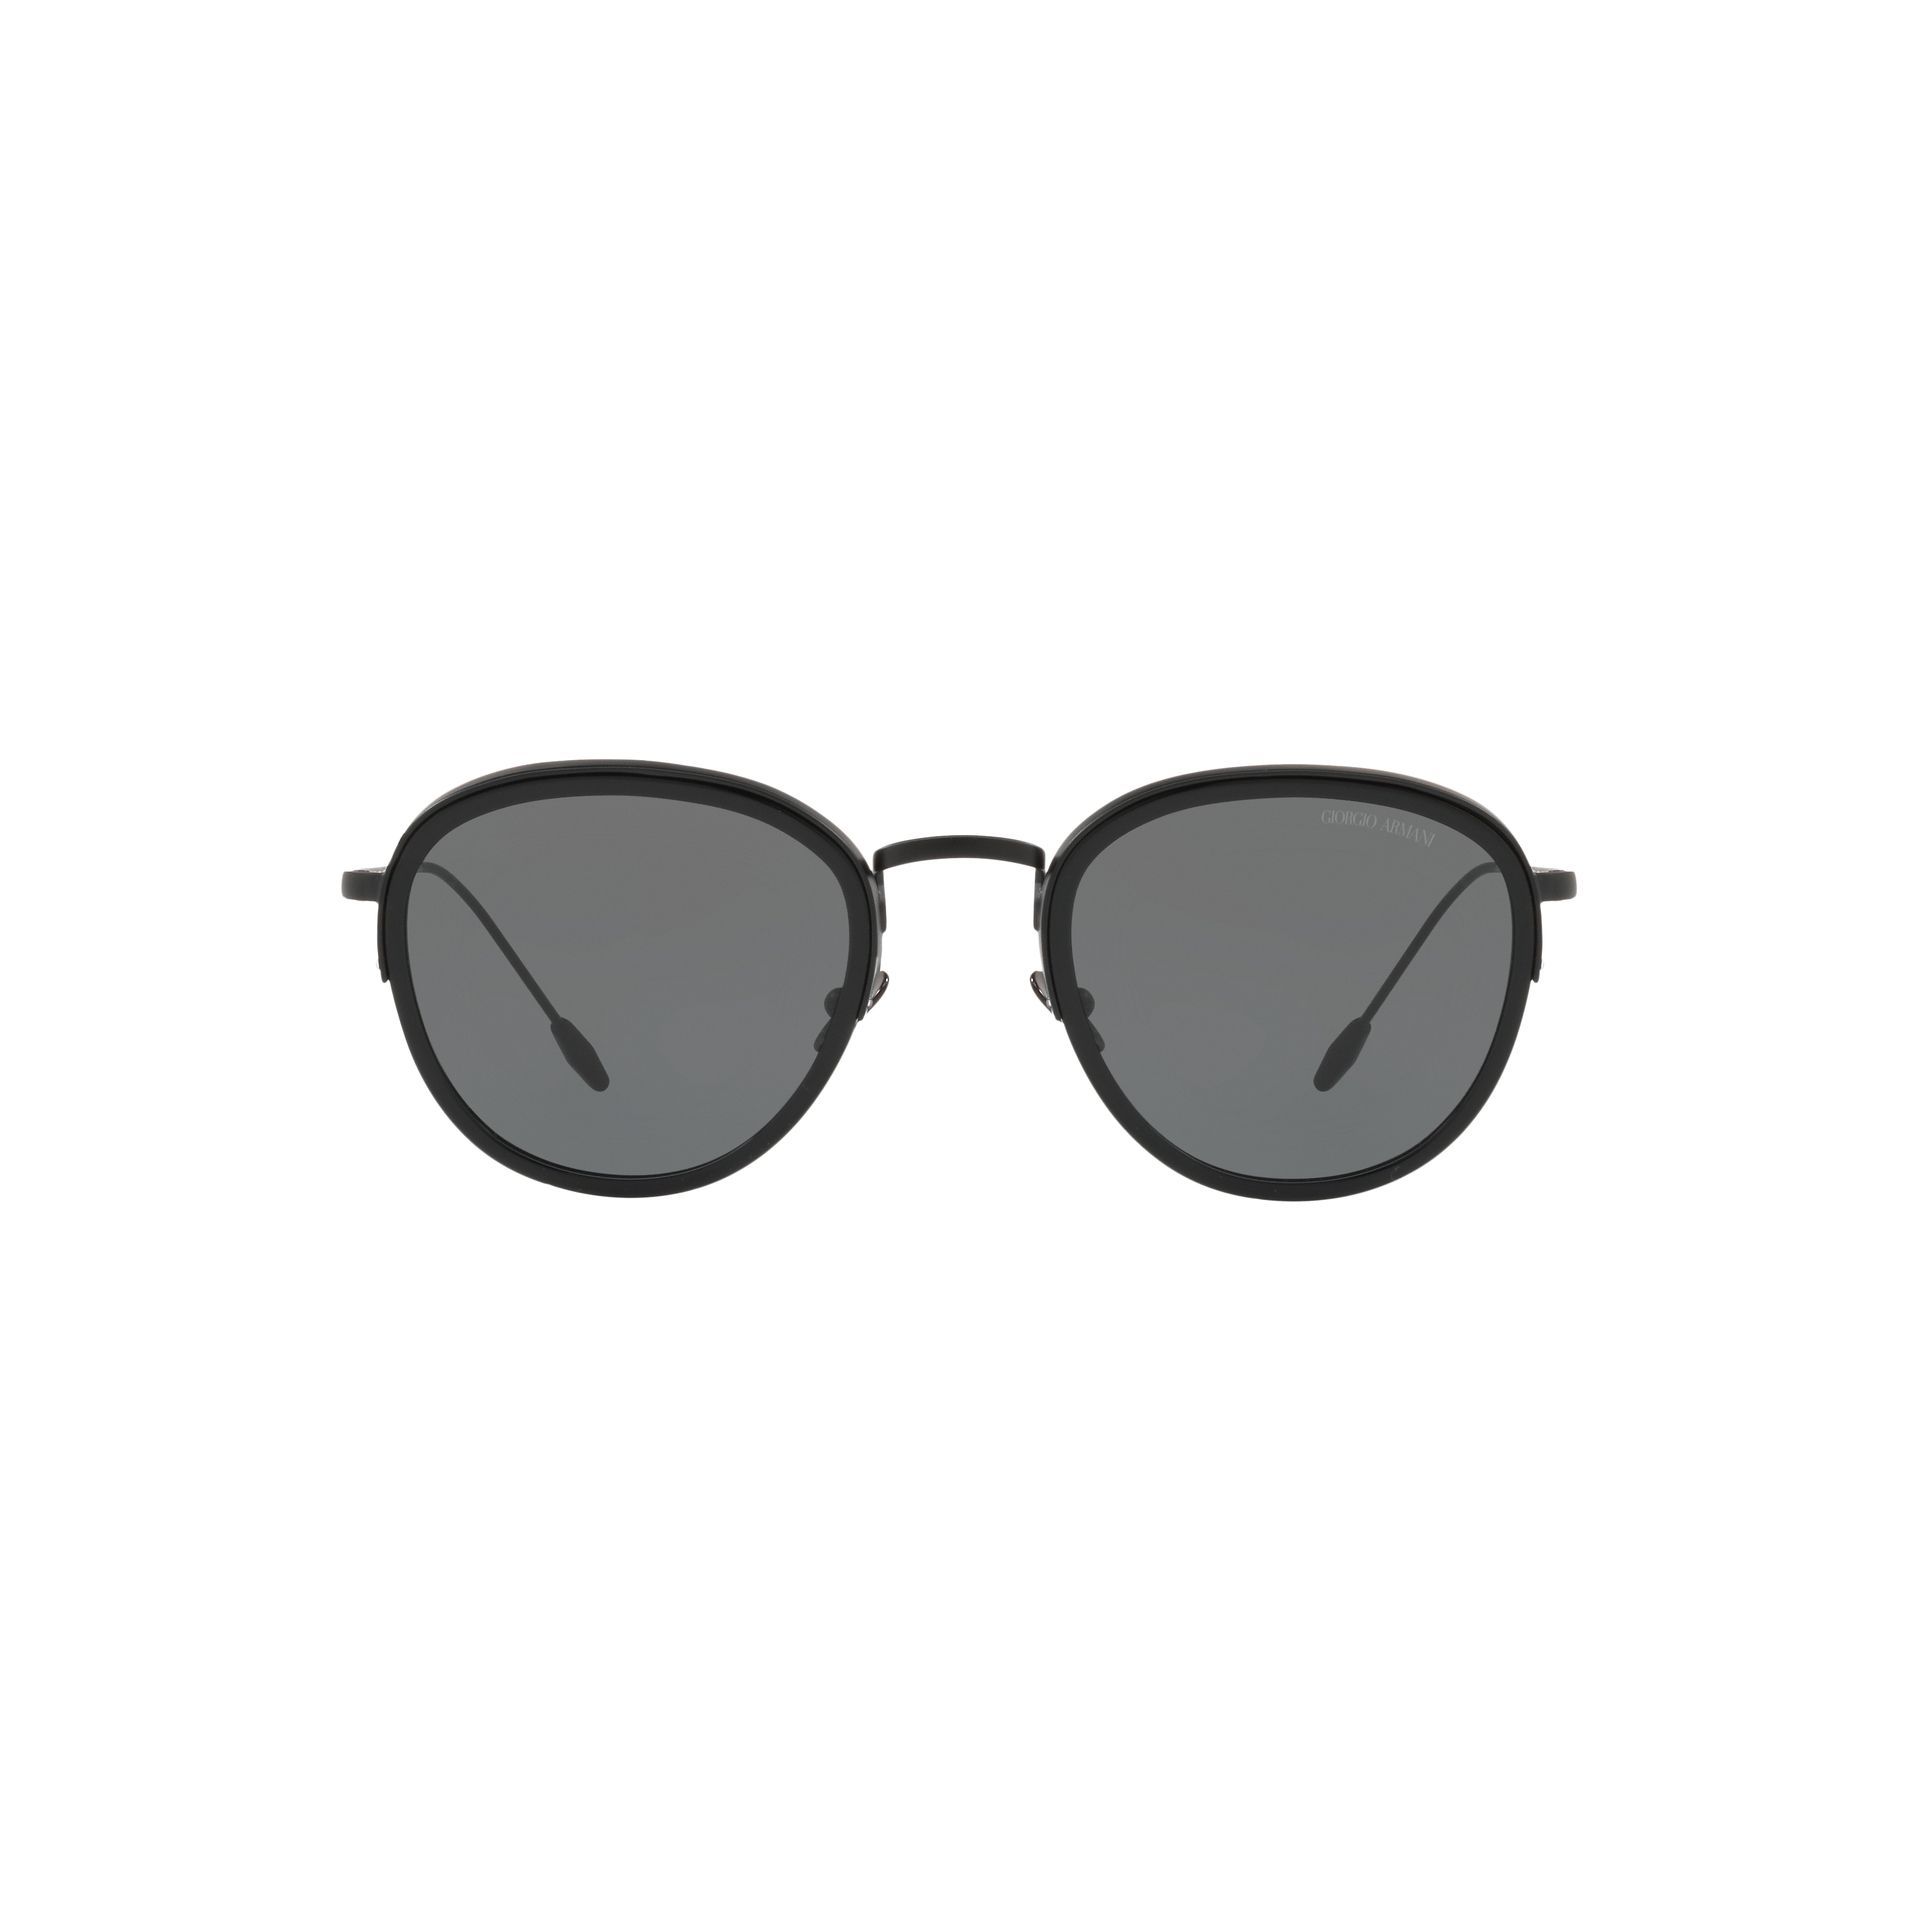 0AR6068 Round Sunglasses 3001 87 - size 50